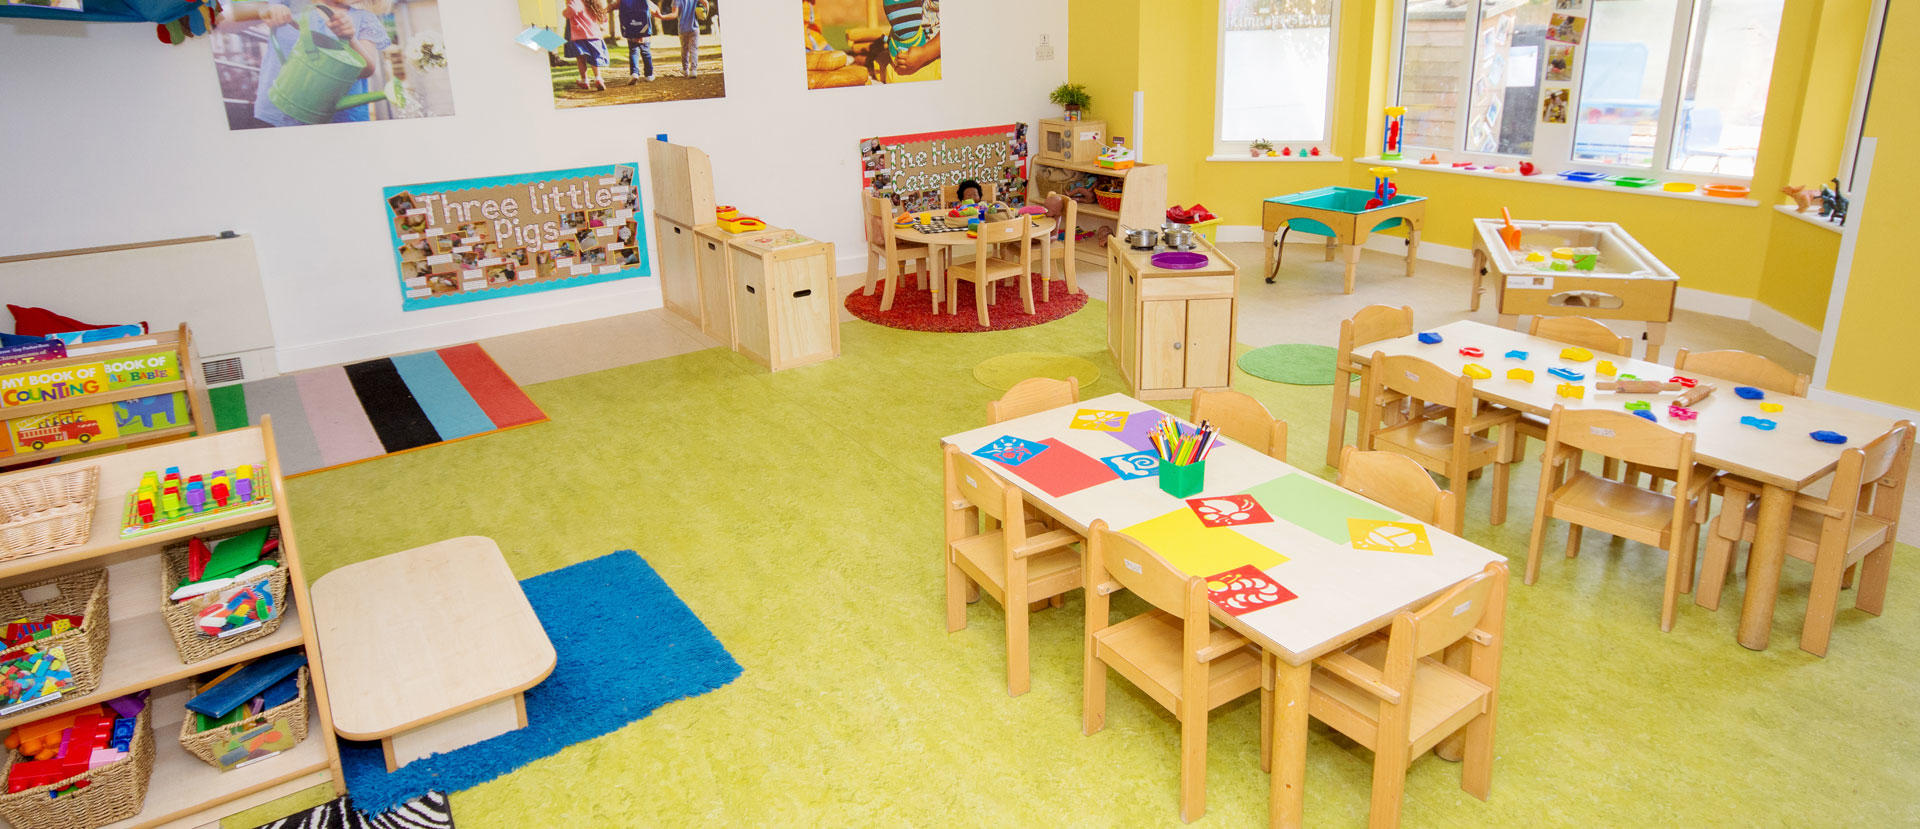 Bright Horizons Sale Day Nursery and Preschool Sale 03333 059548